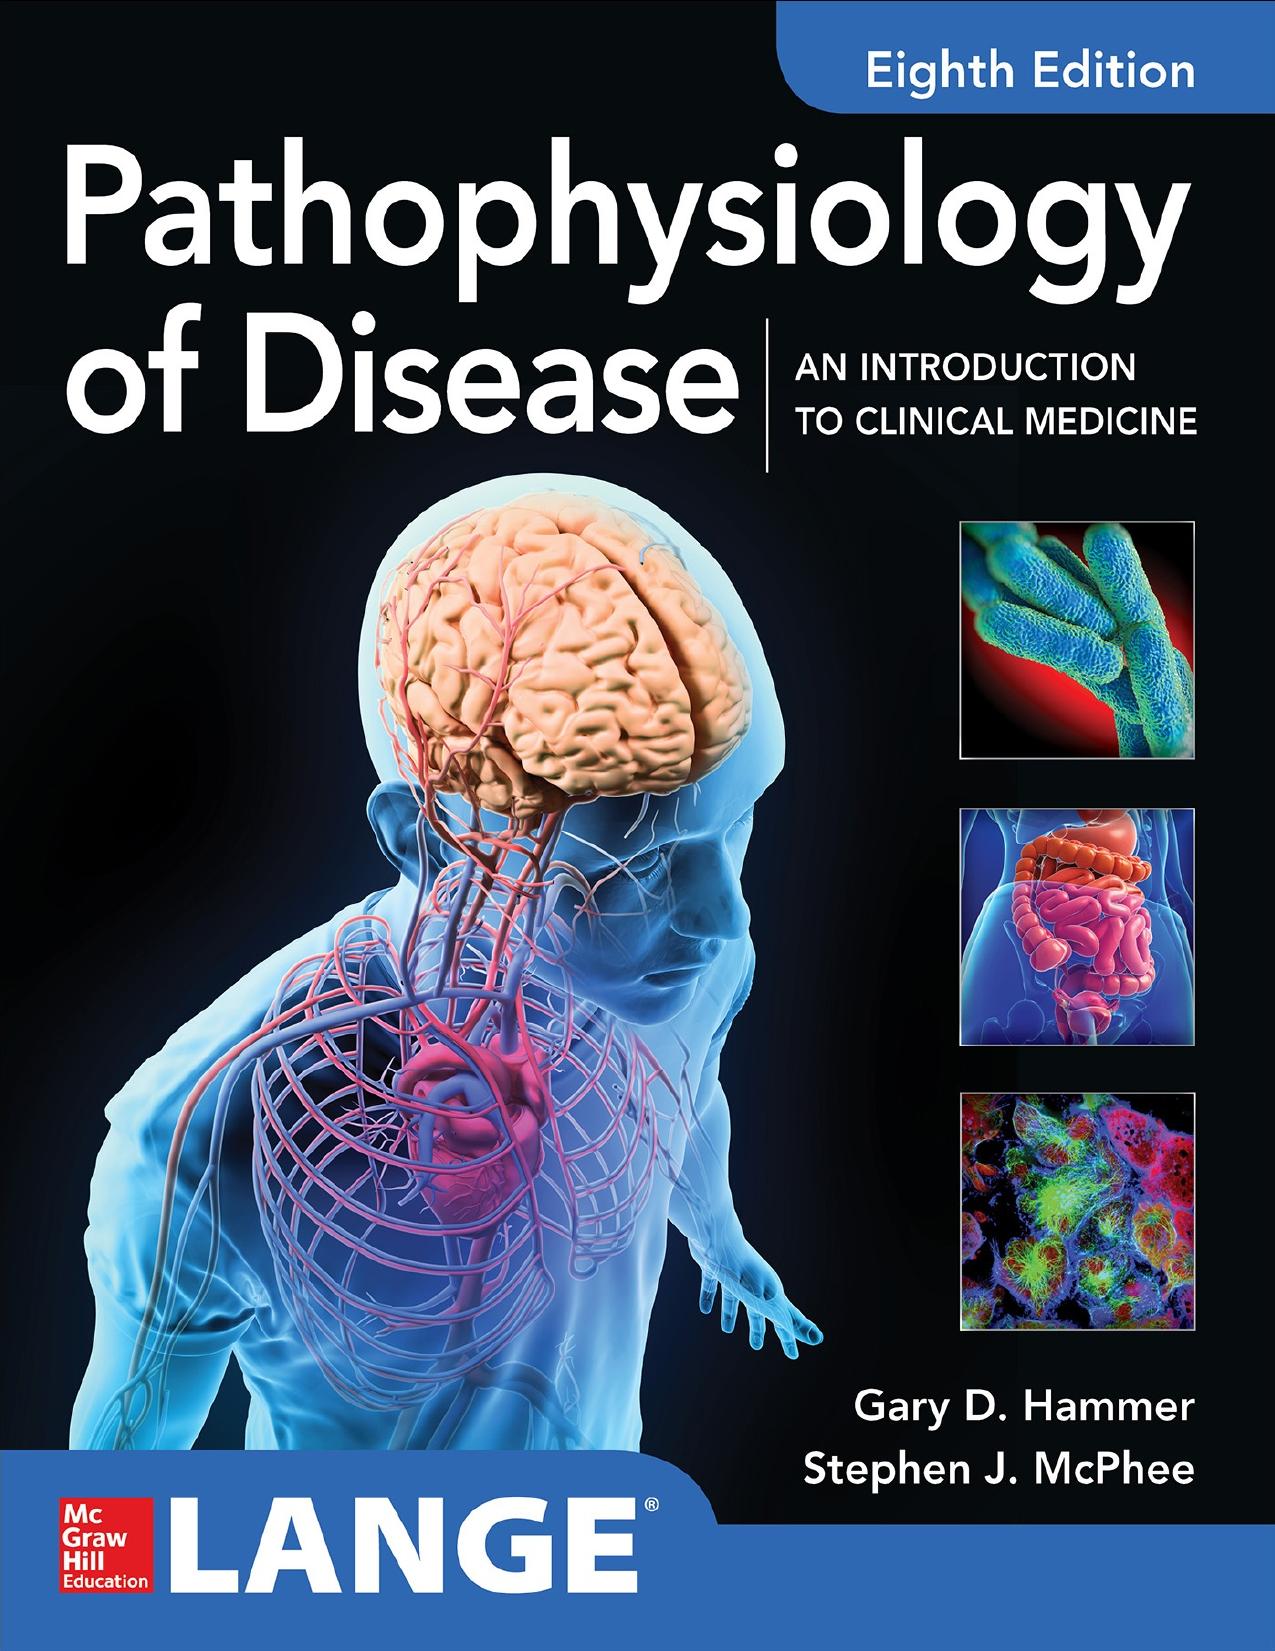 Pathophysiology of Disease: An Introduction to Clinical Medicine, Eighth Edition